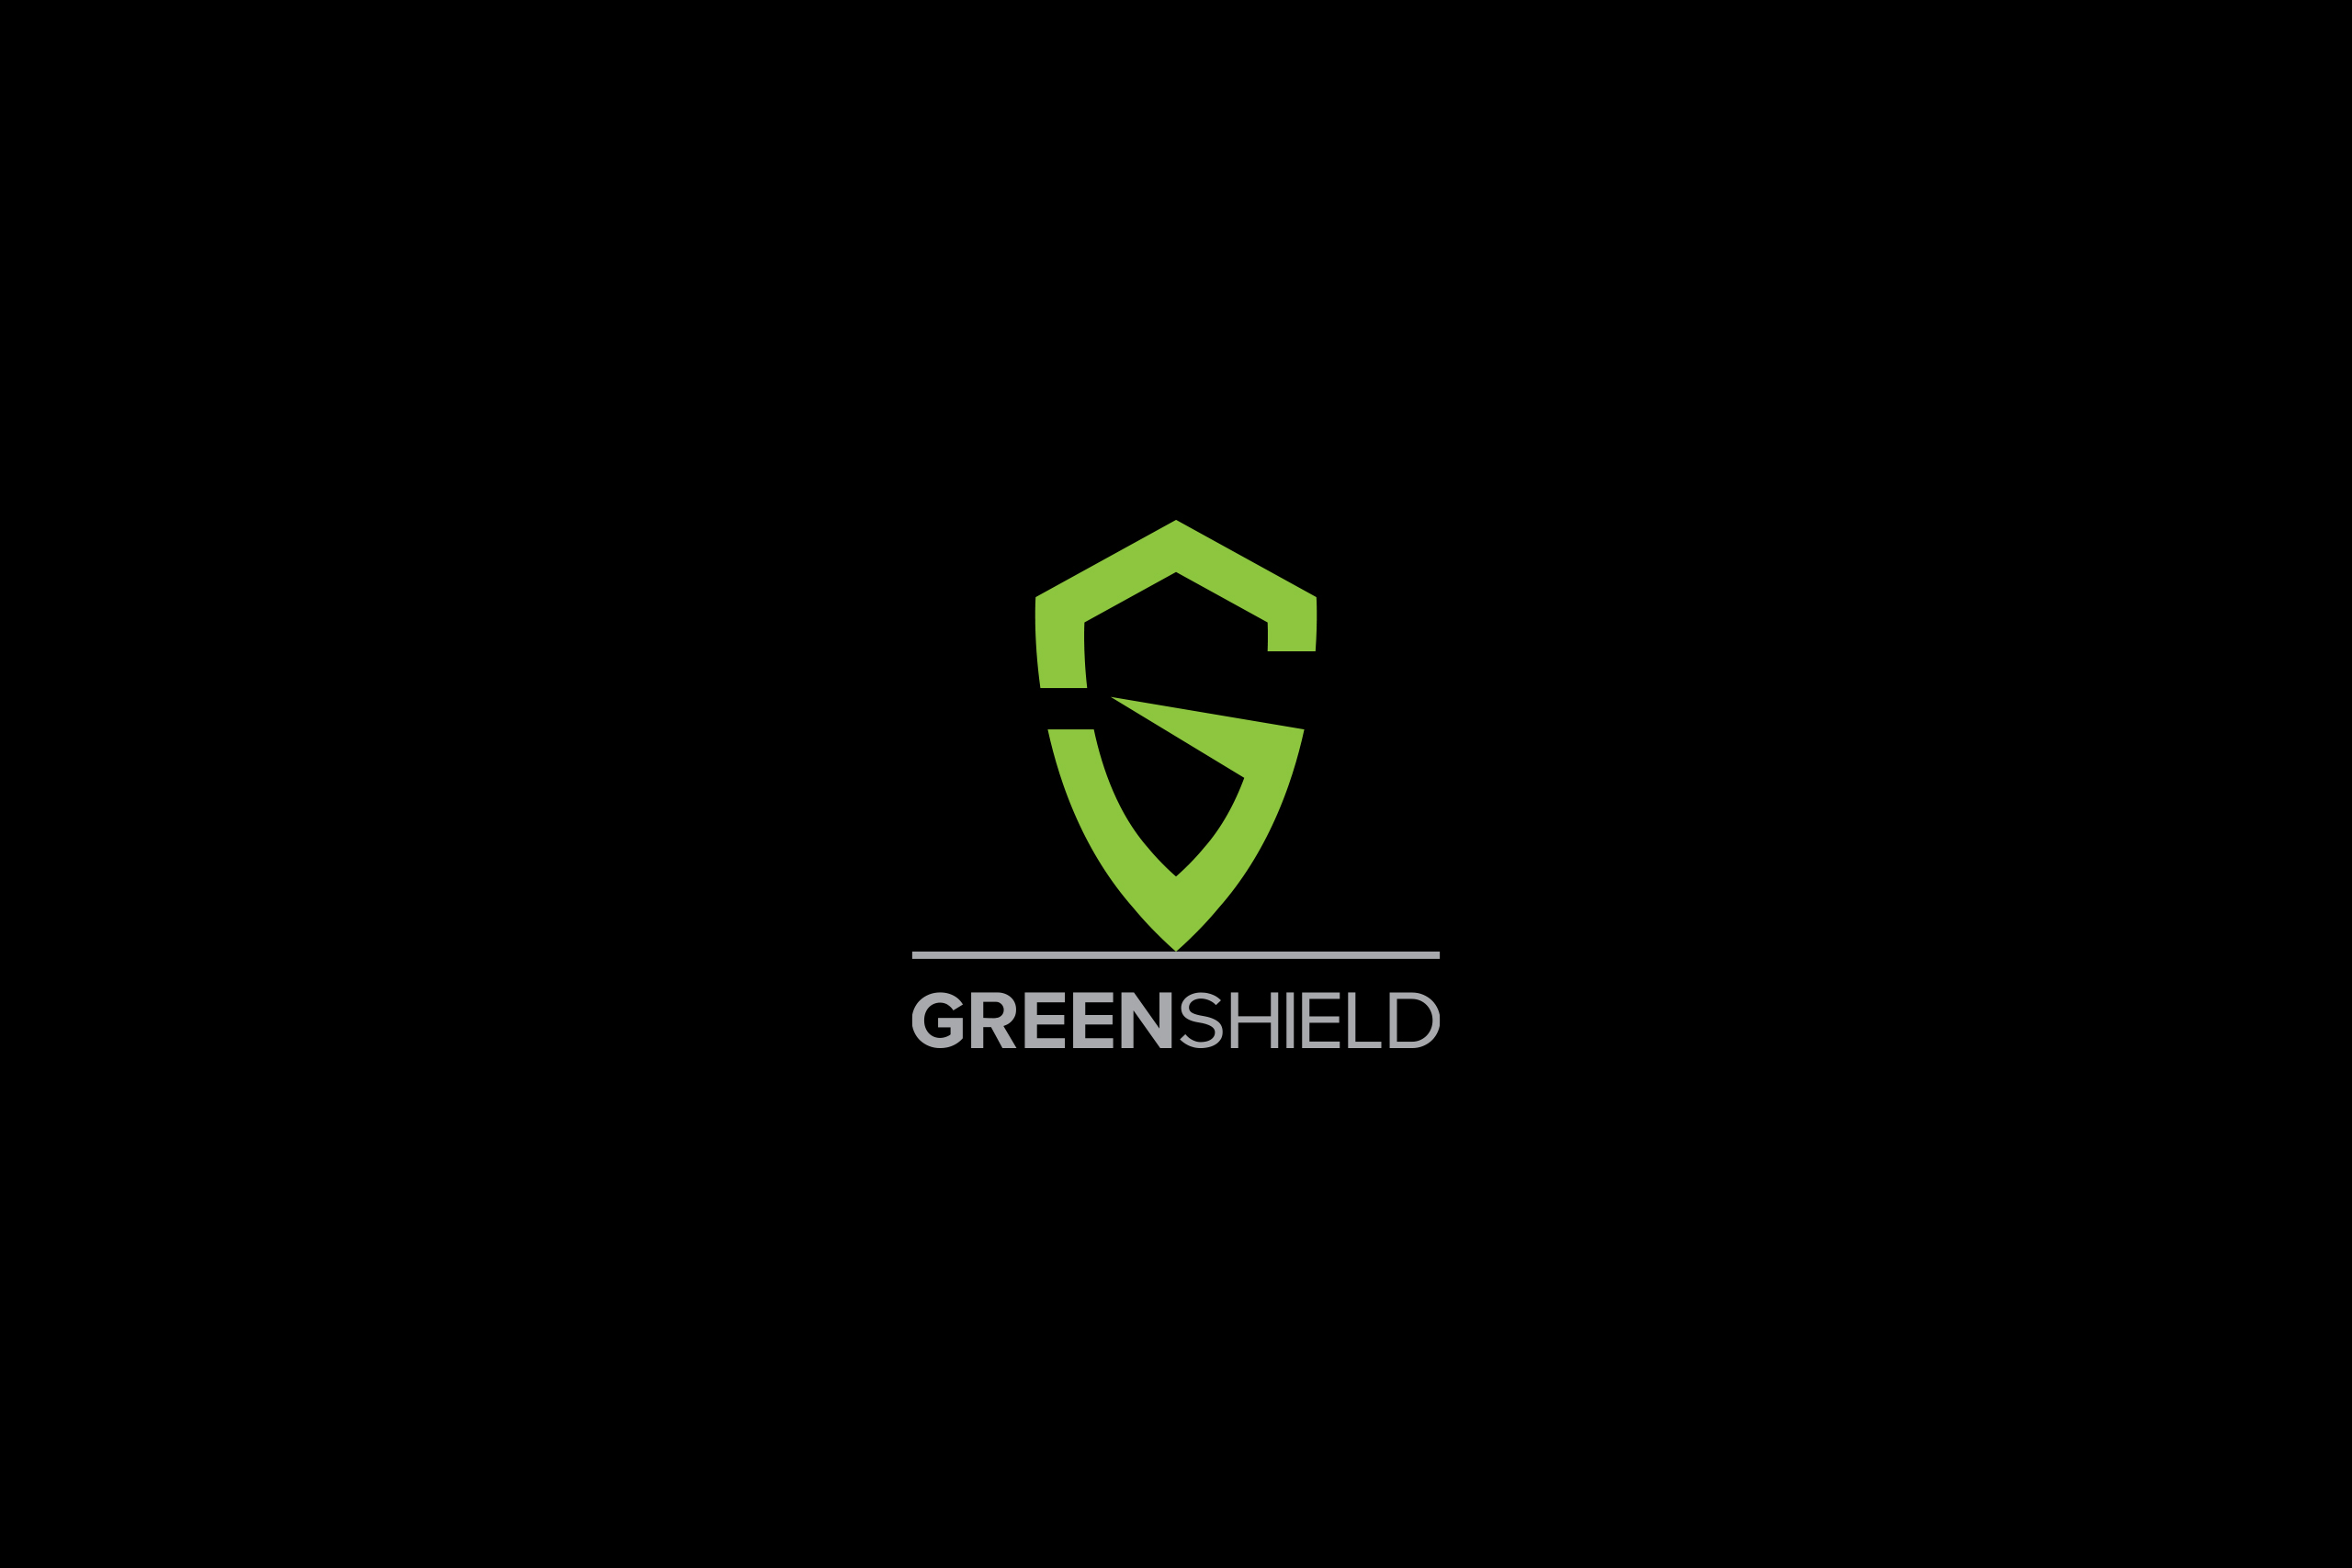 08-GreenShield-Created-by-StormDesignStudio